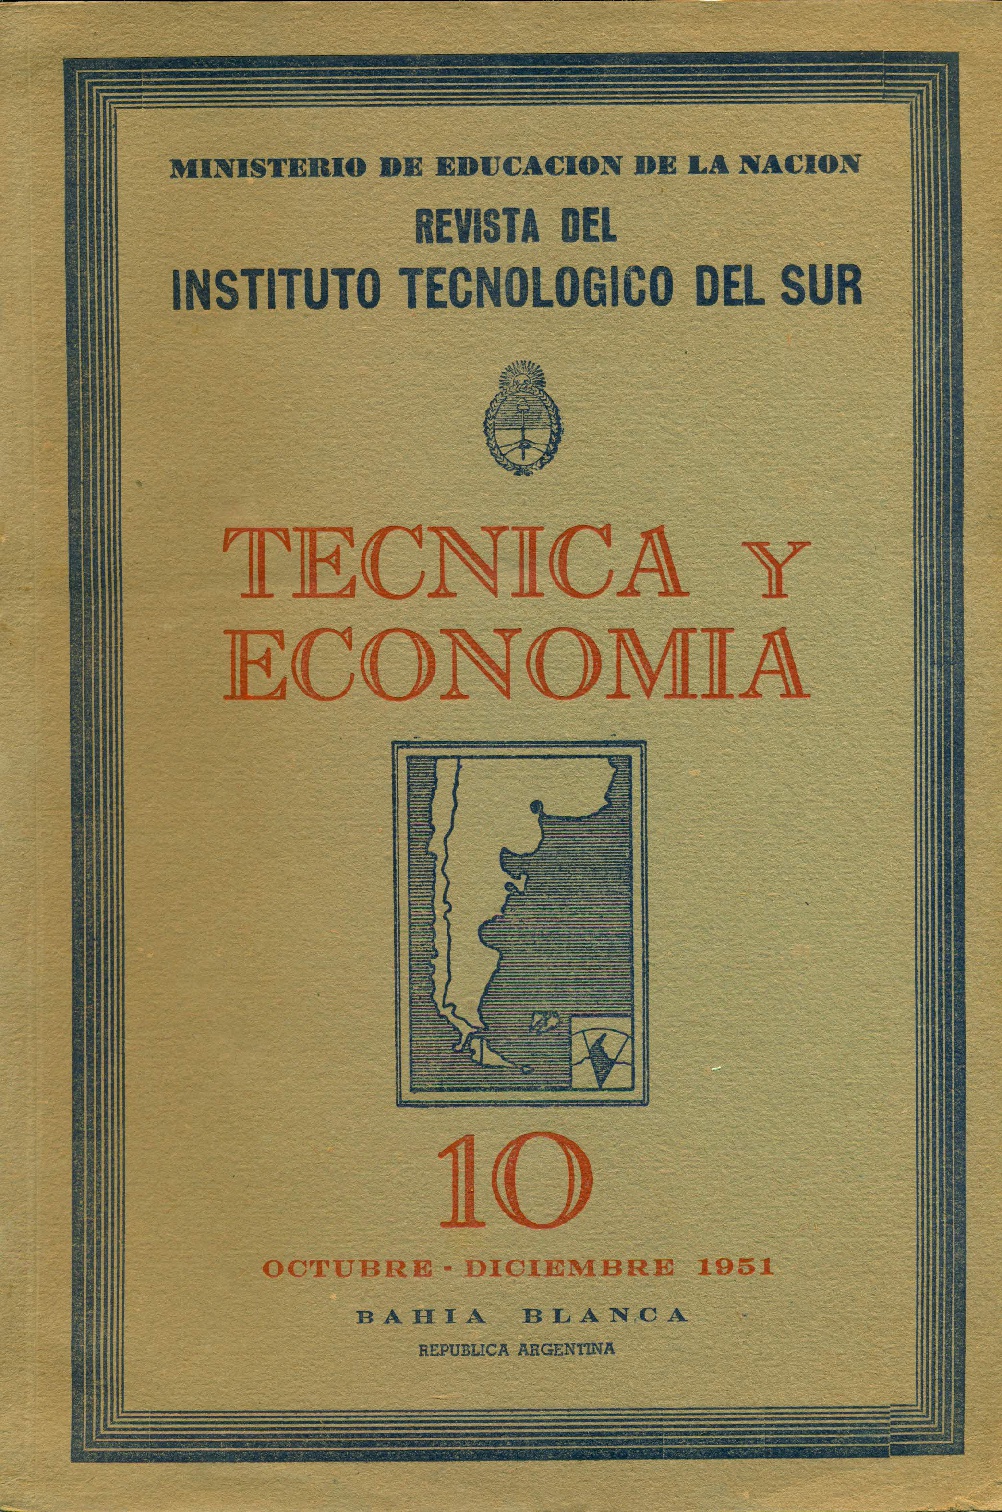 					Visualizar v. 3 n. 10 (1951): Técnica y Economía
				